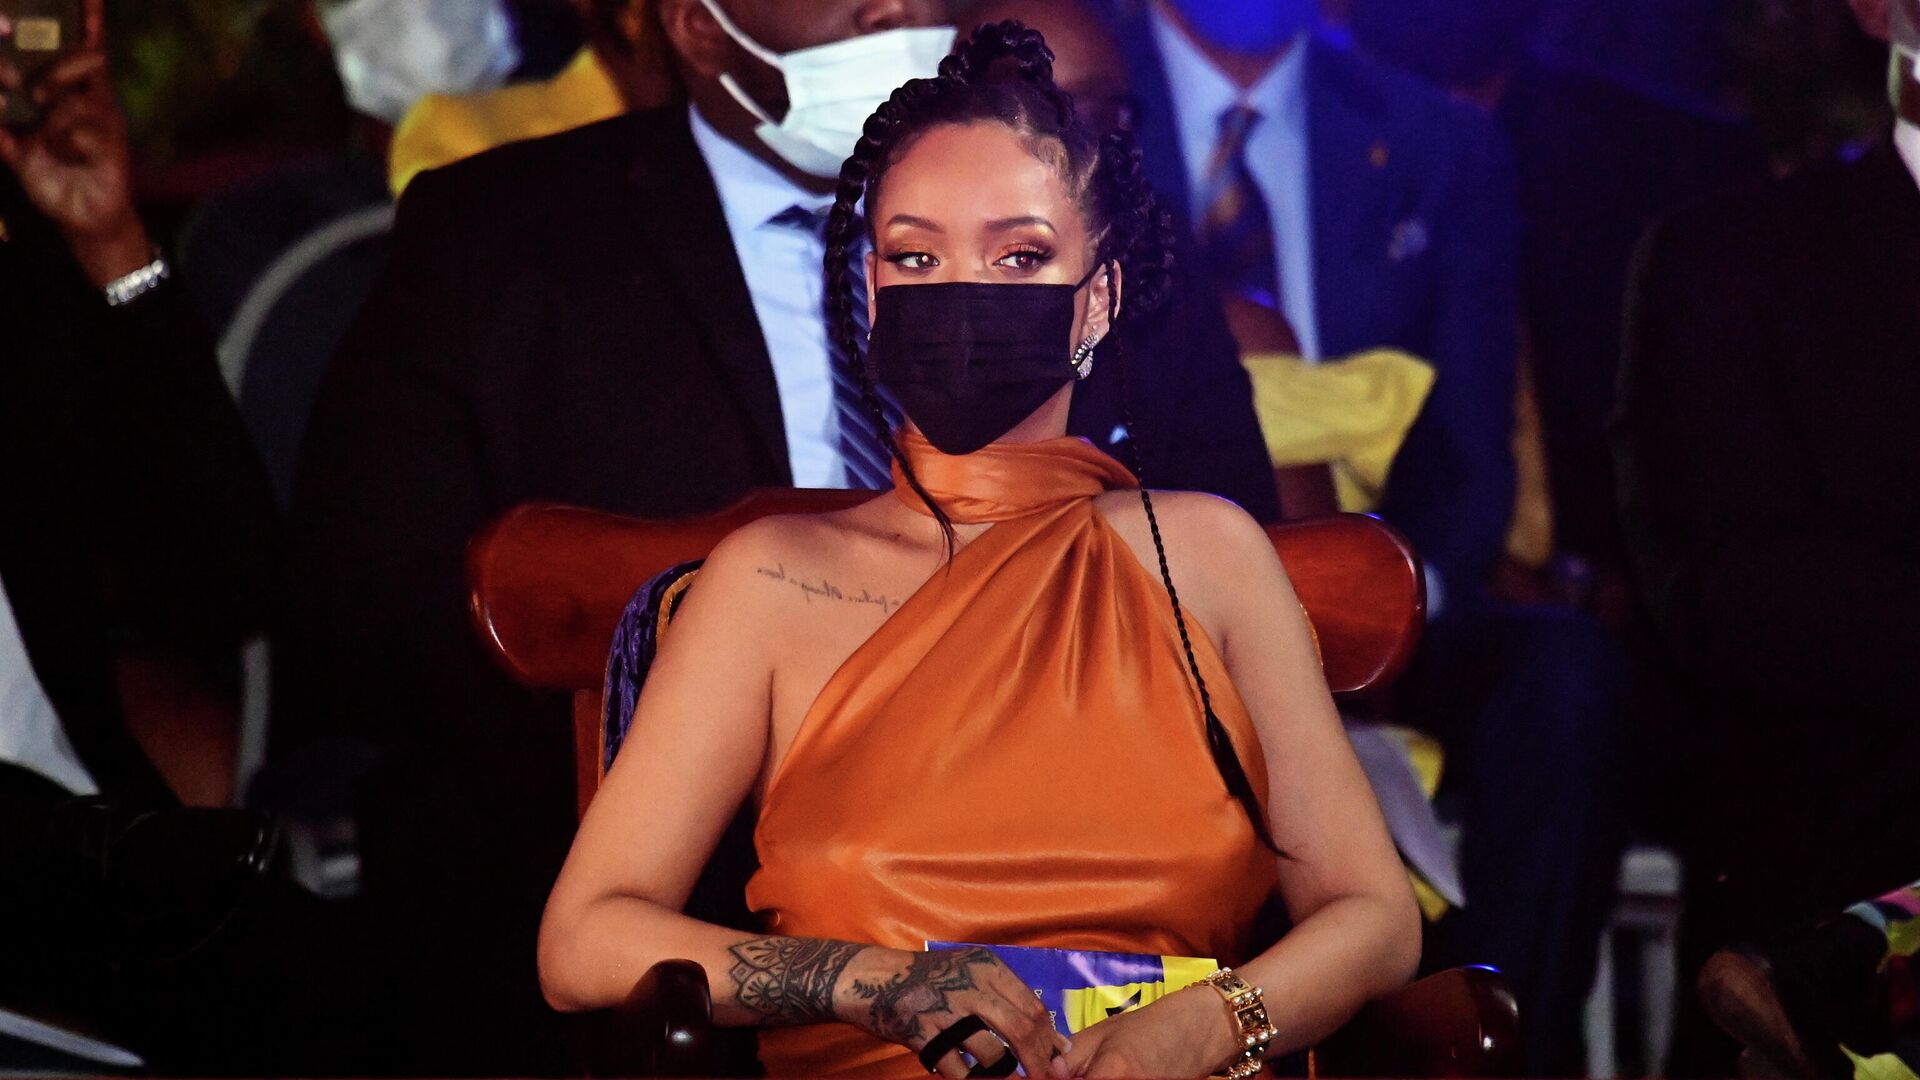 Dainininkė Rihanna Barbadoso prezidento inauguracijos ceremonijoje - Sputnik Lietuva, 1920, 30.11.2021